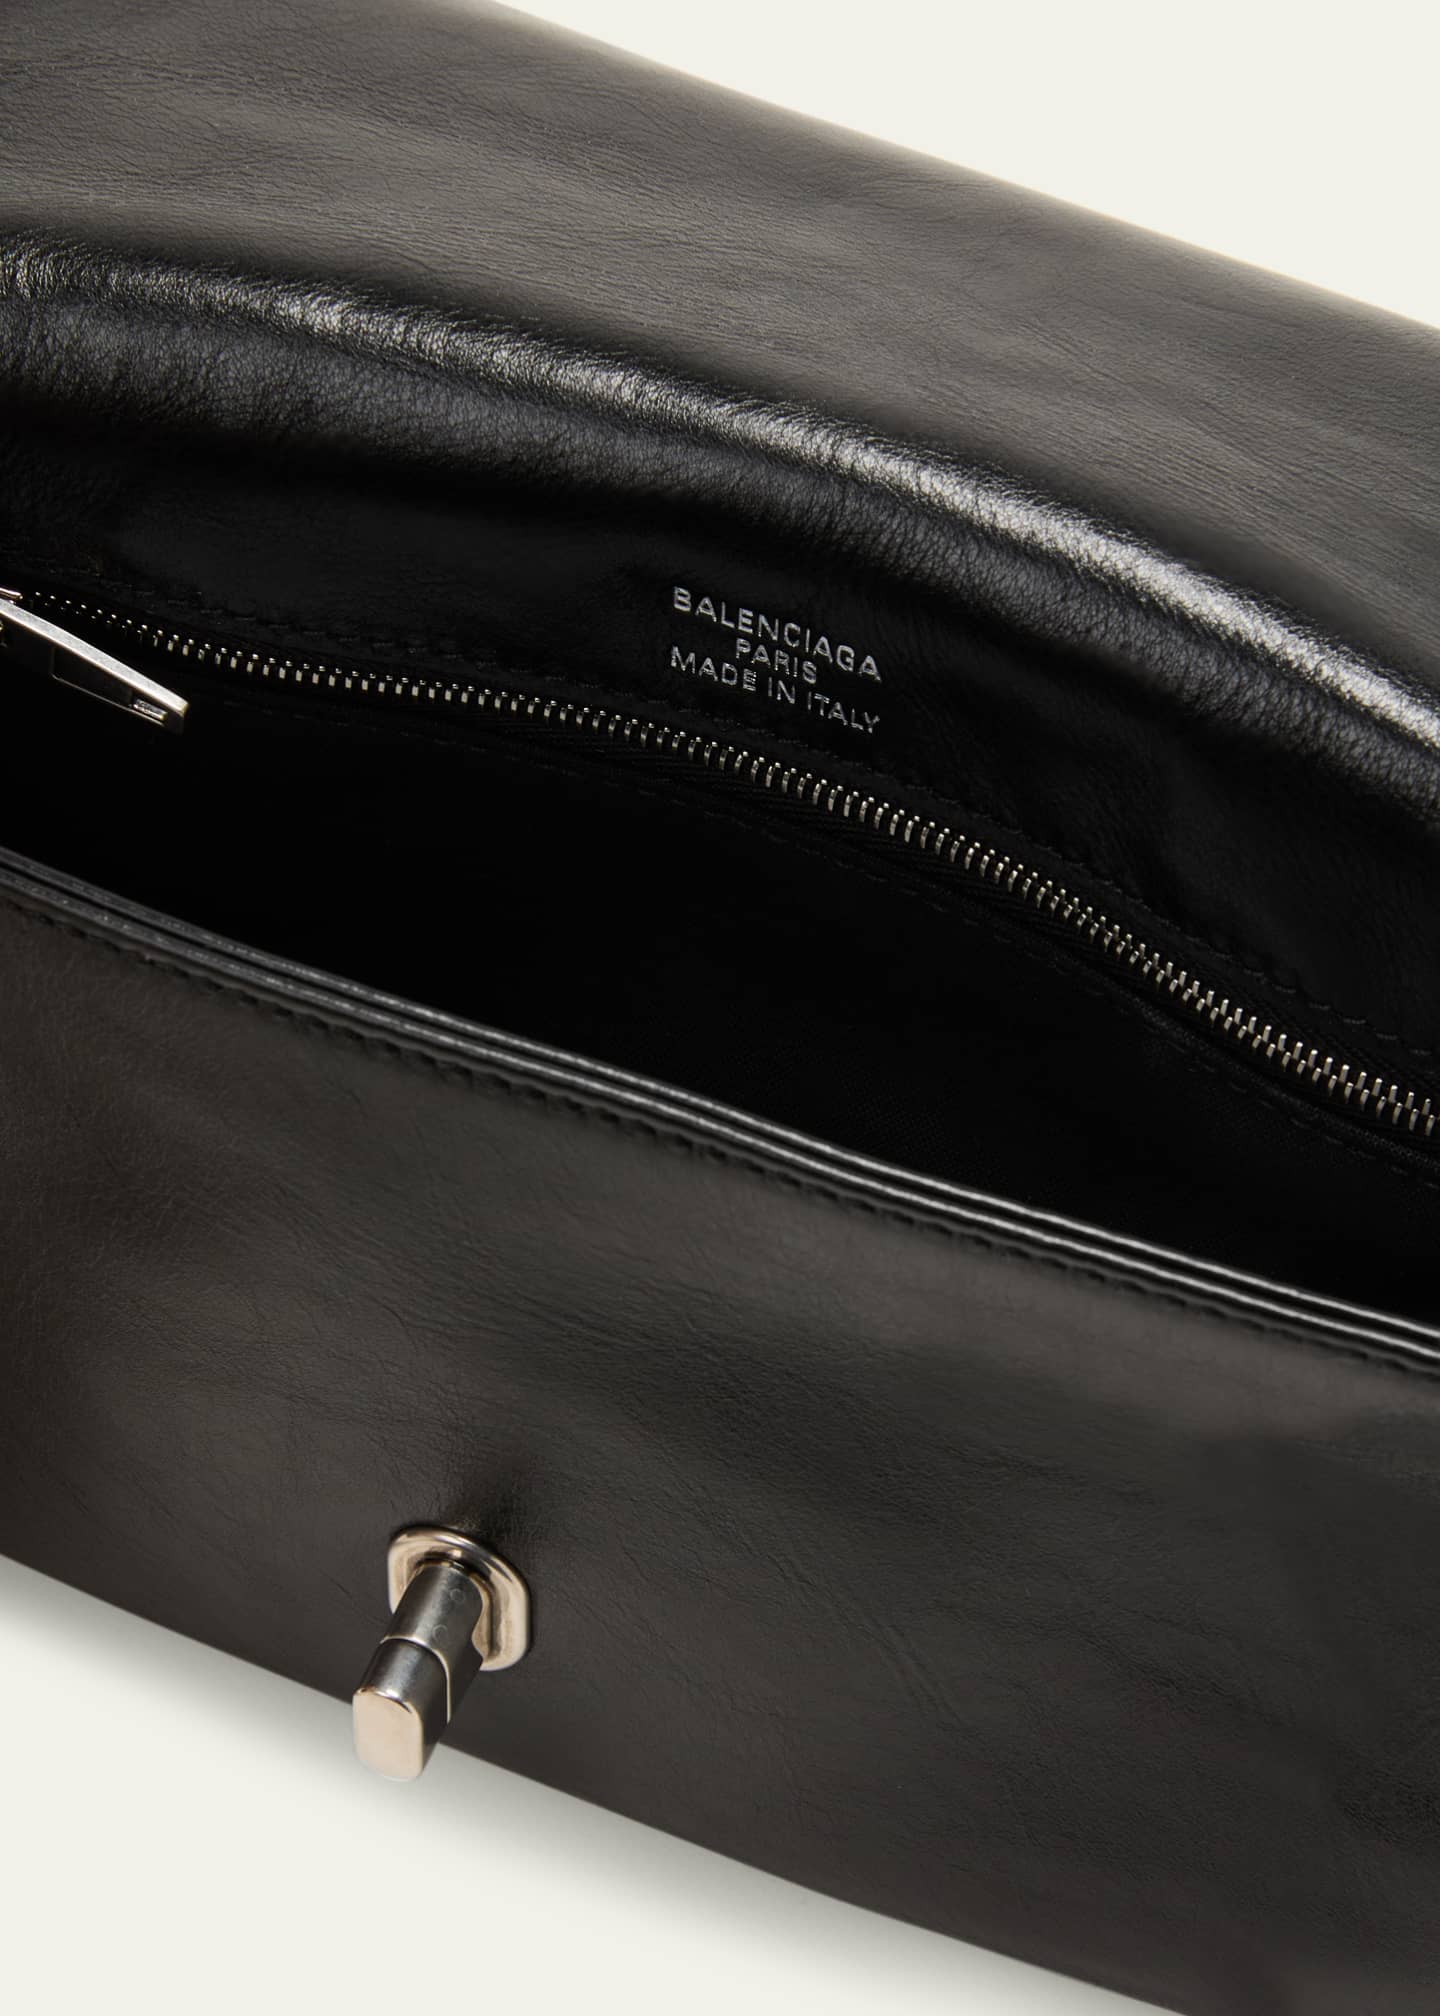 Balenciaga Small Napa Leather Chain Bag Bergdorf Goodman